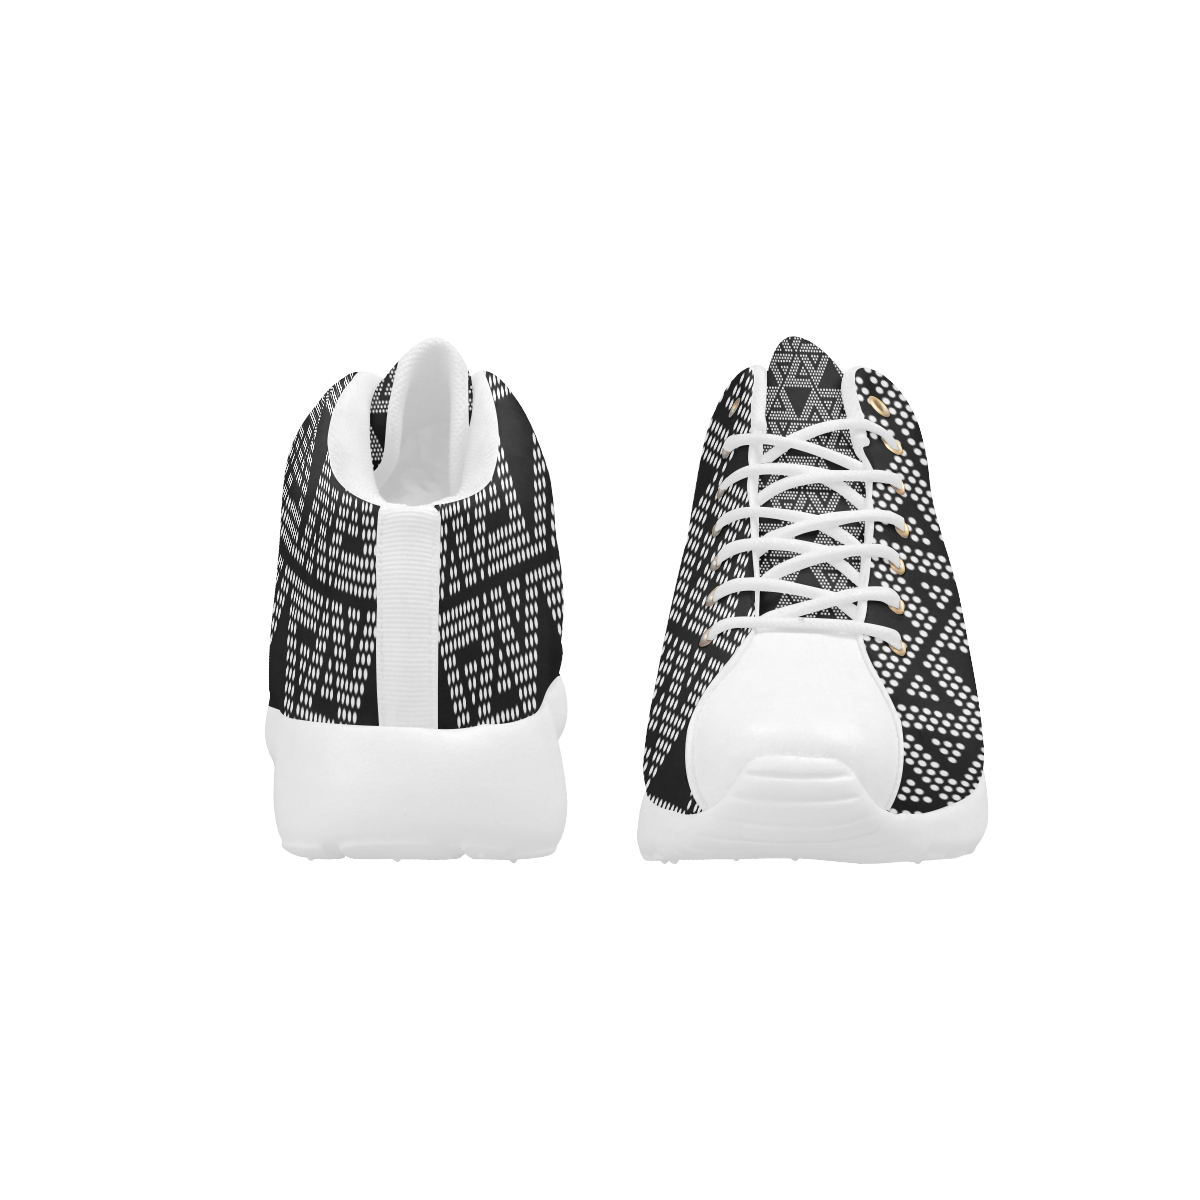 Polka Dots Party Men's Basketball Training Shoes (Model 47502)